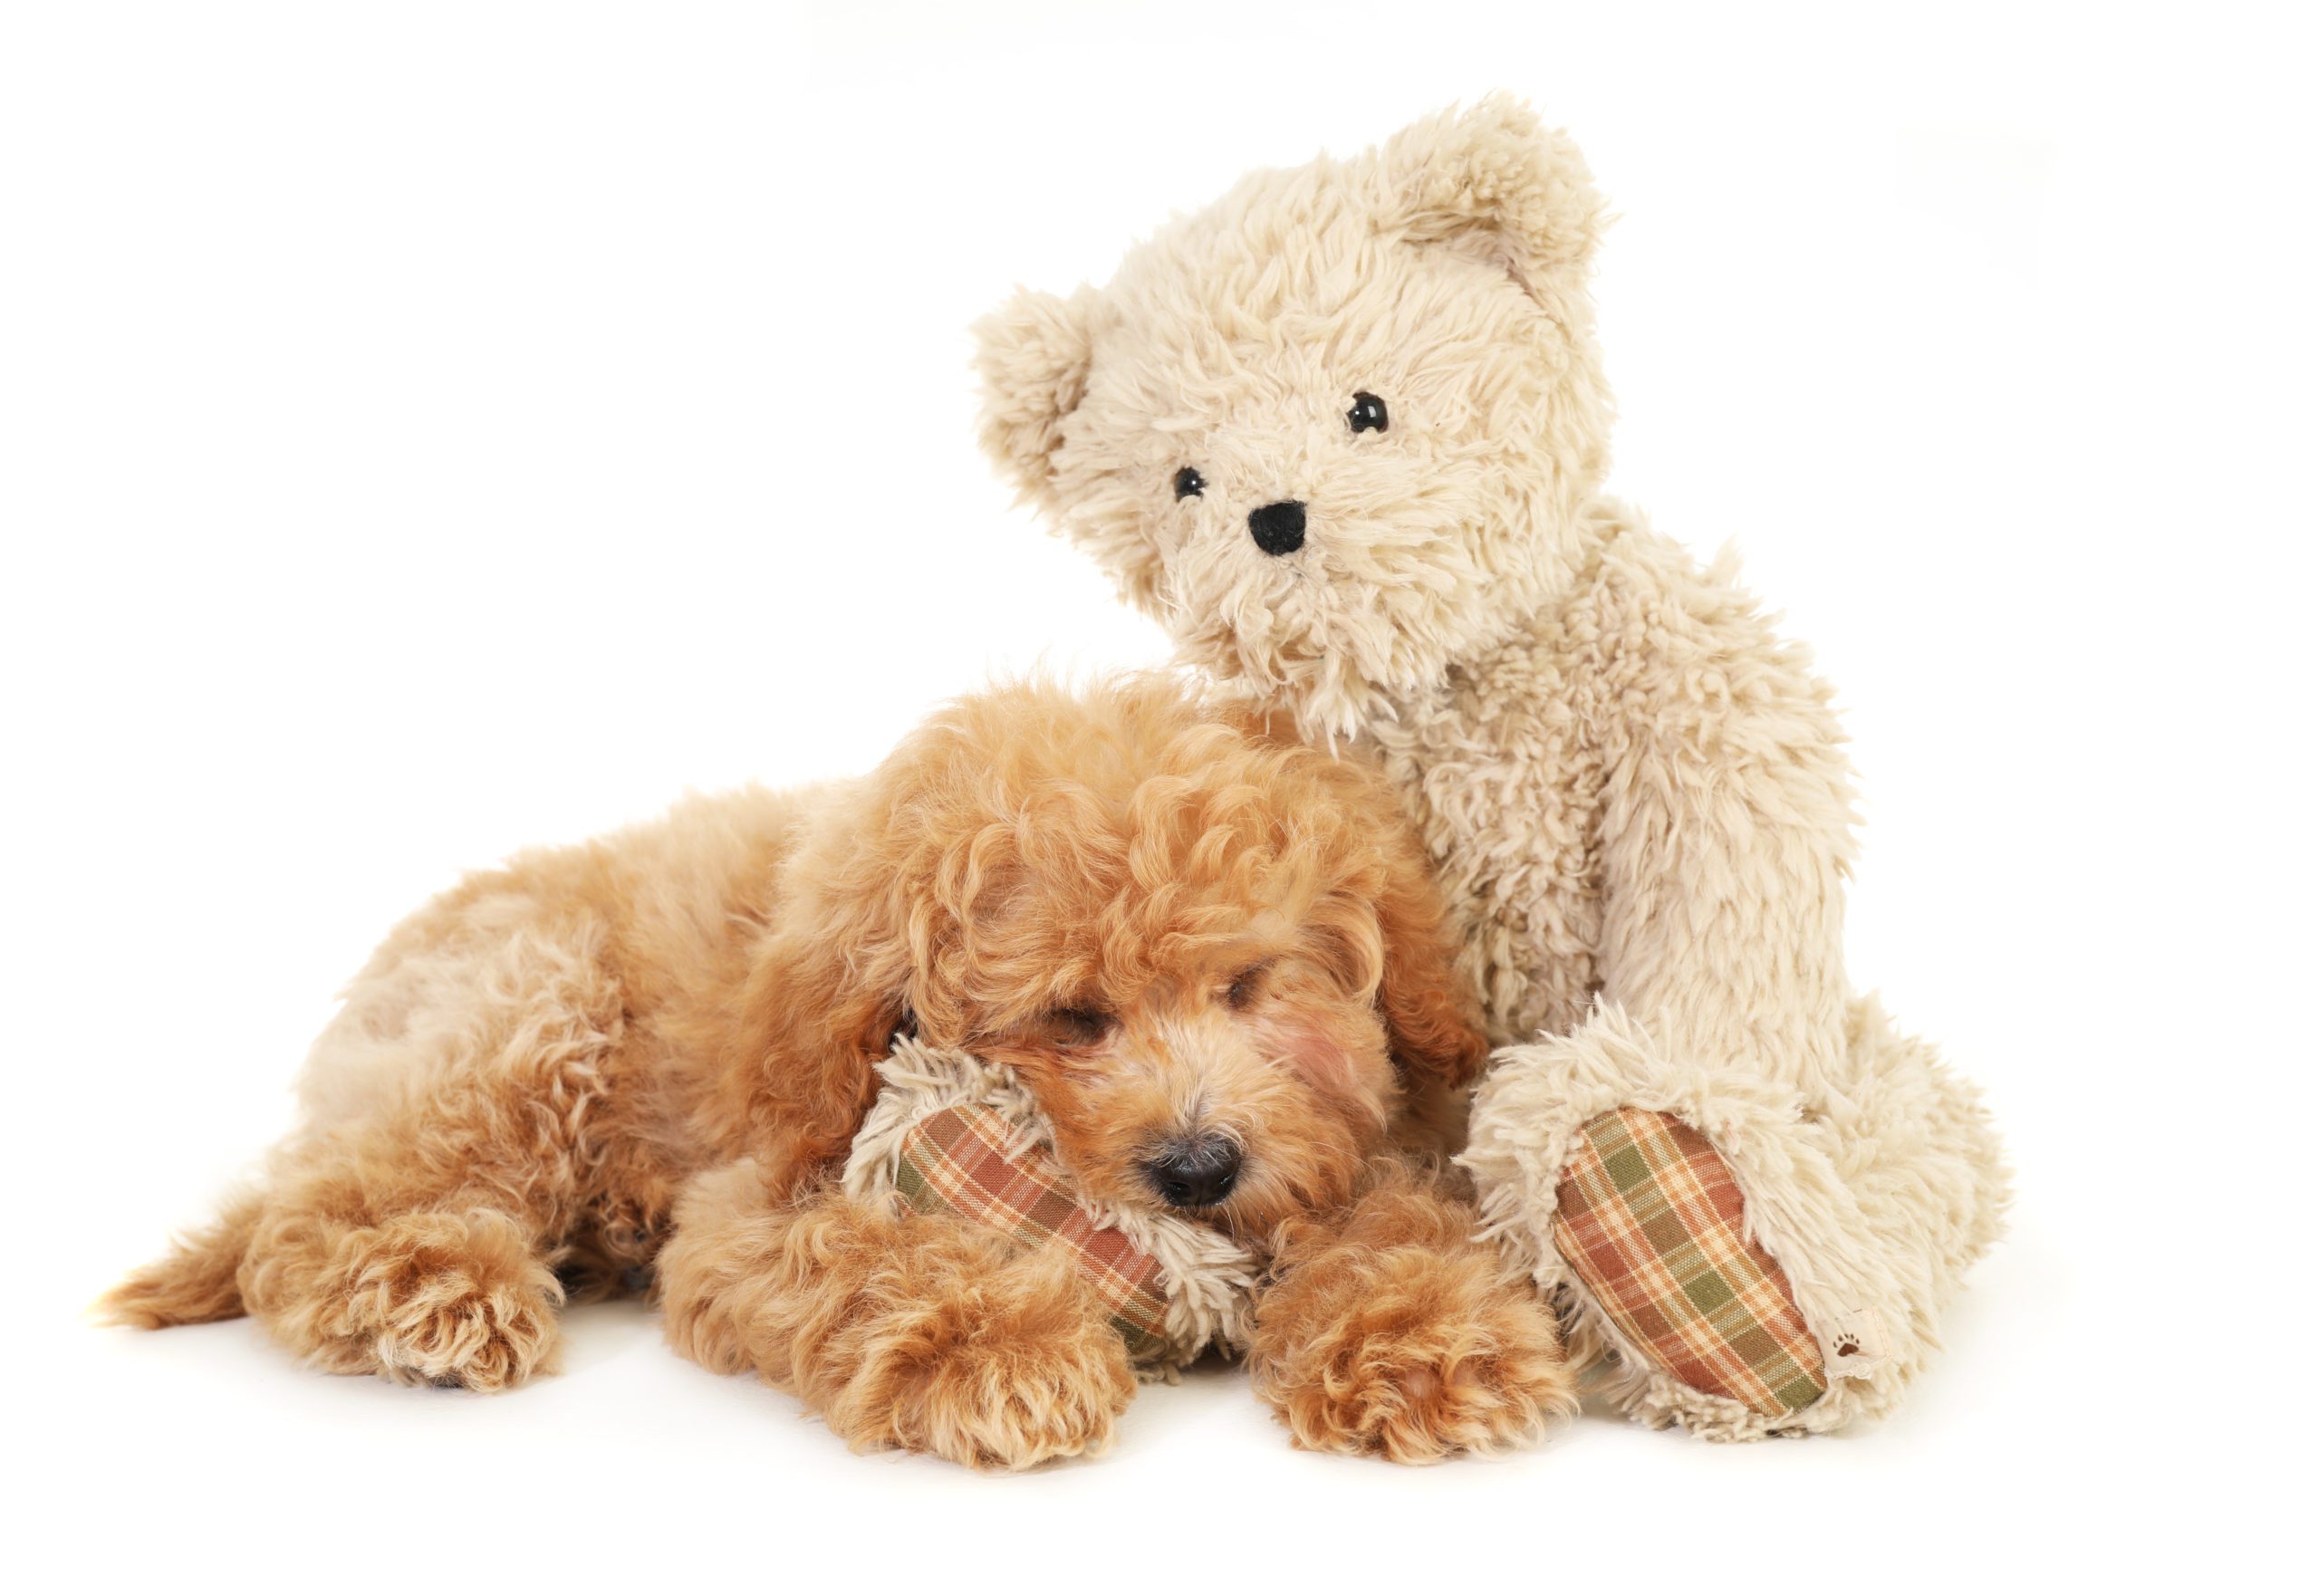 a sleepy goldendoodle puppy with a teddybear